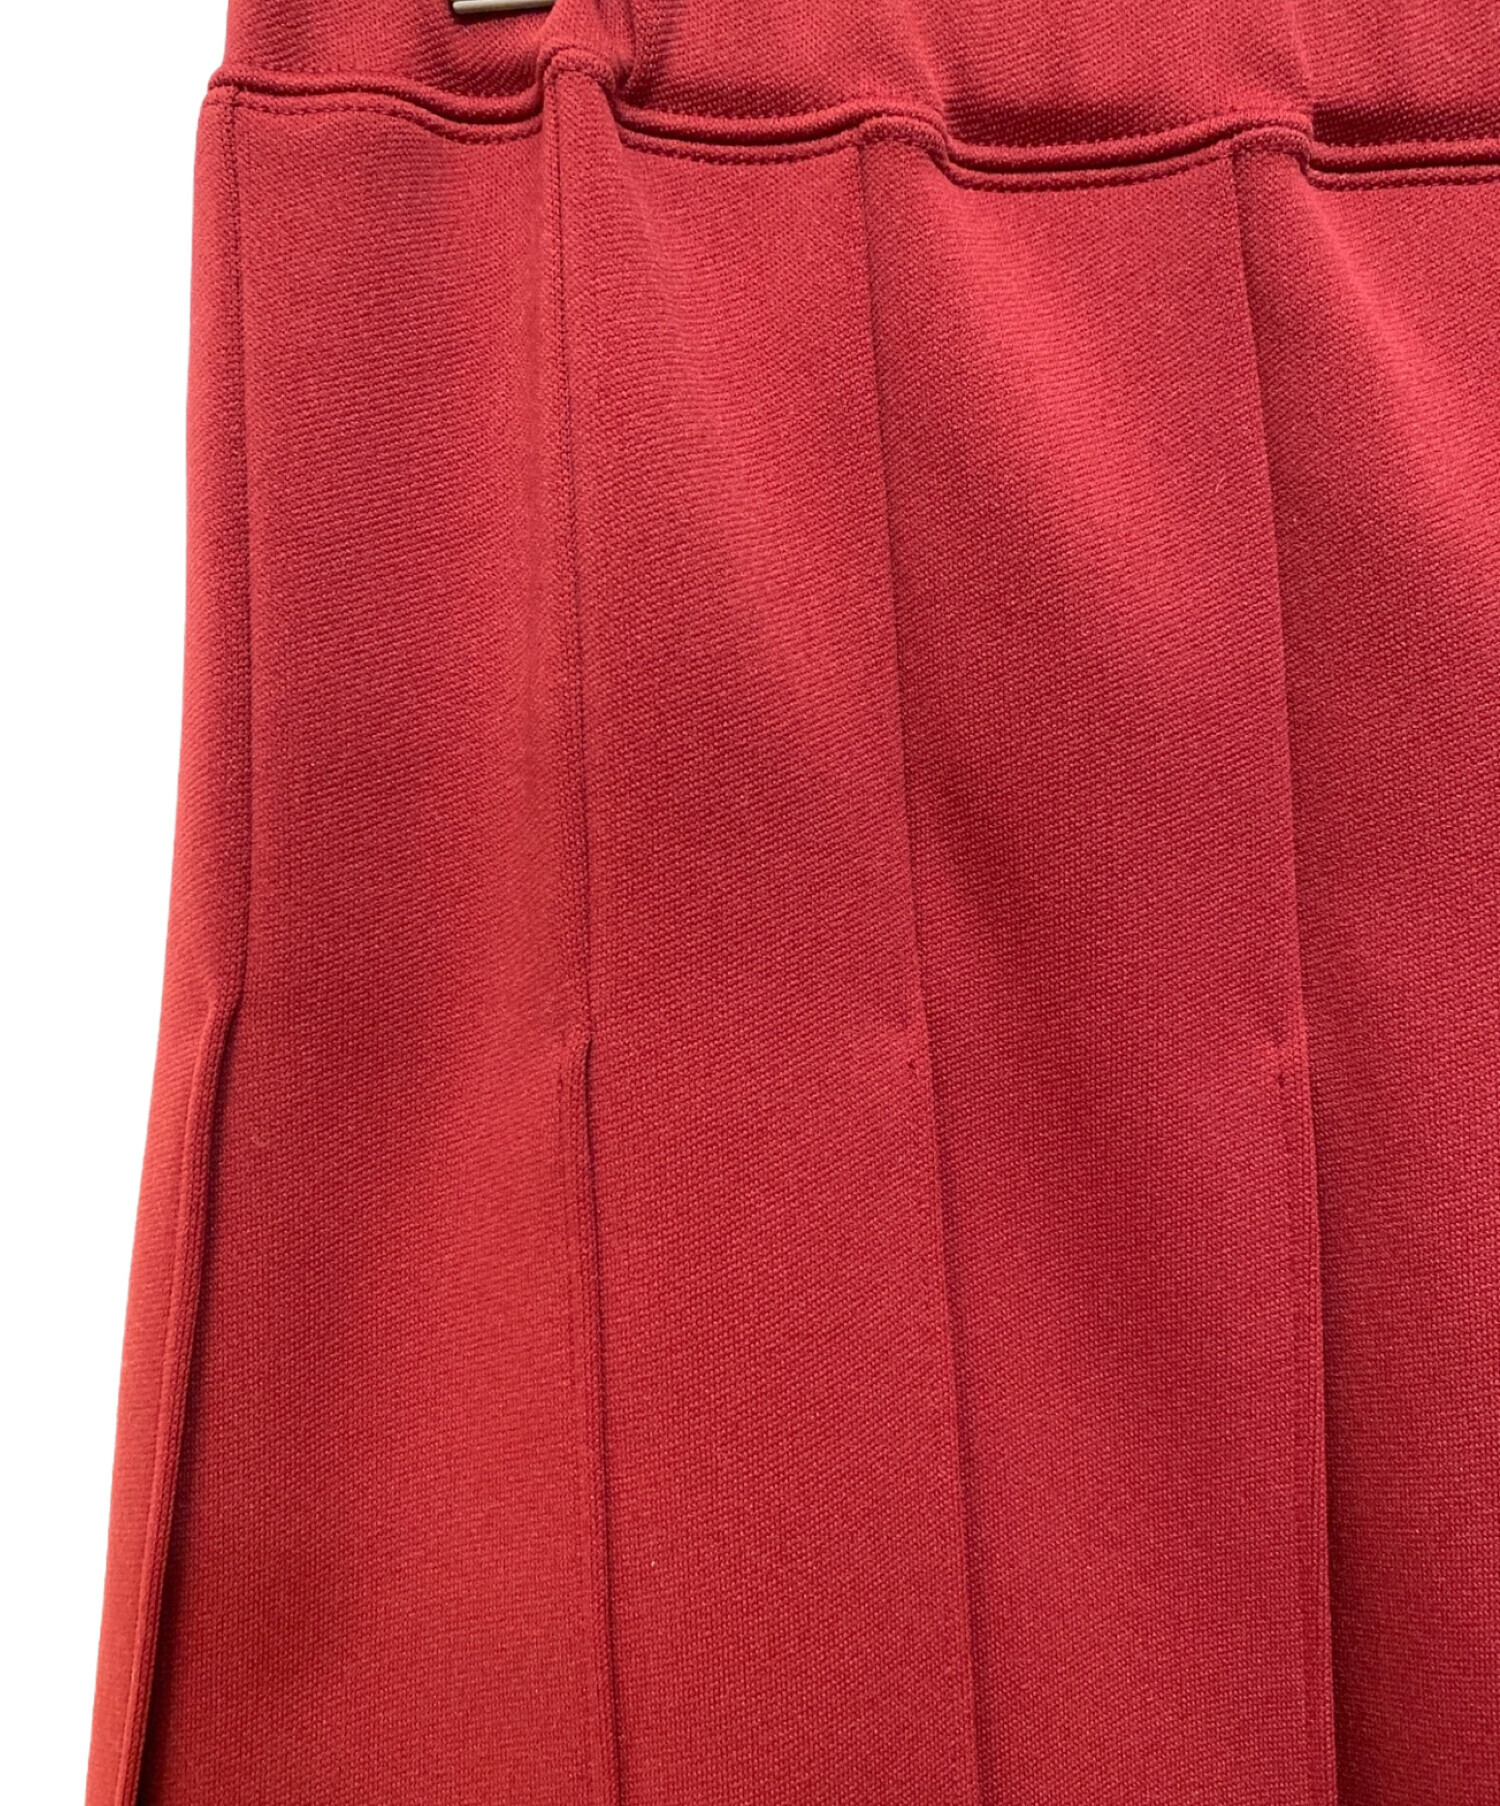 COMME des GARCONS (コムデギャルソン) AD2022 jersey pleated skirt (ジャージプリーツスカート) レッド  サイズ:M